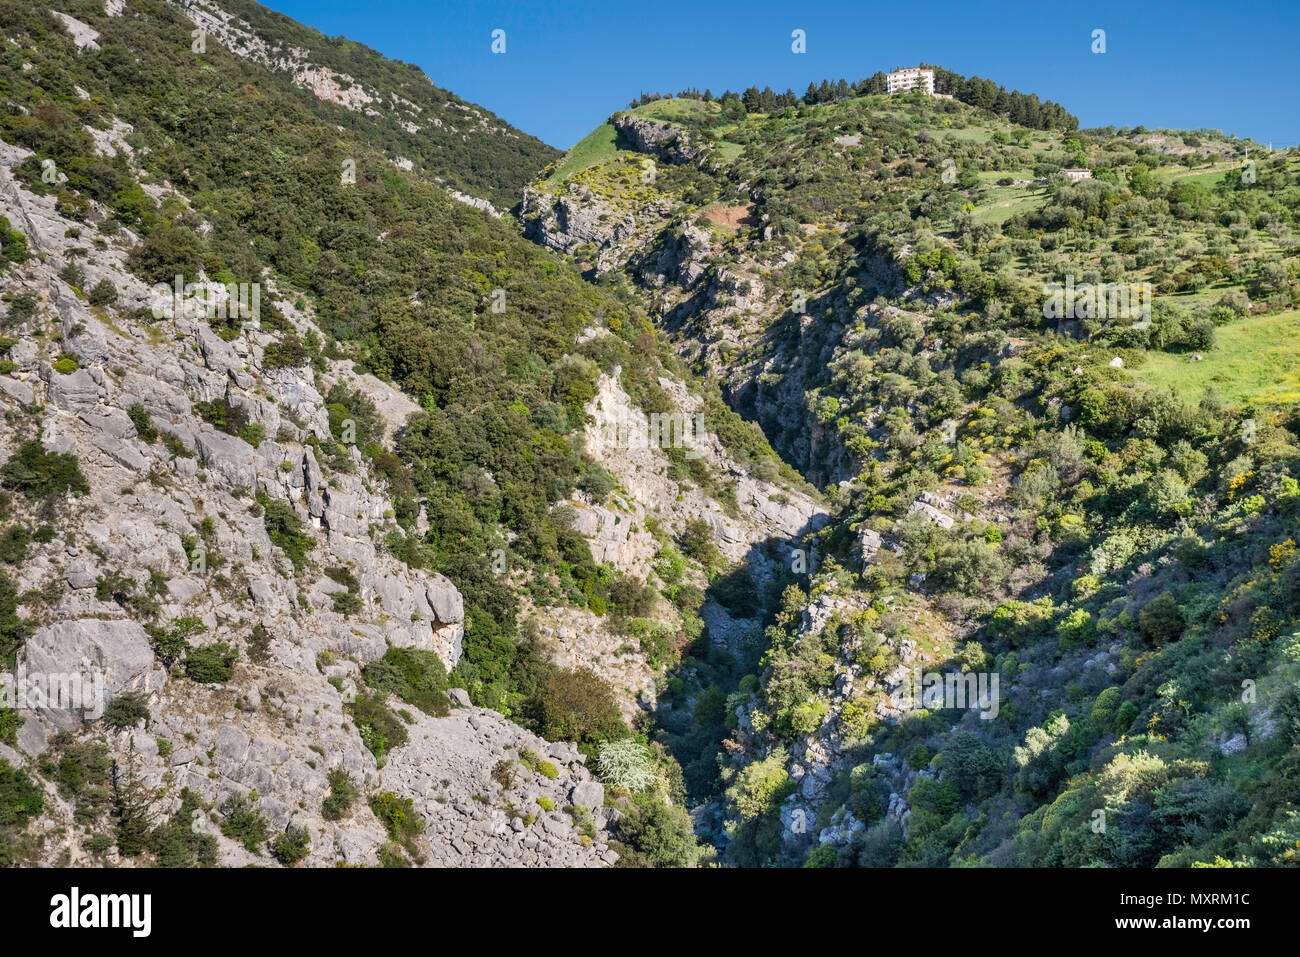 Bifurto Bifurto del Abisso (Abyss), près de la ville de Cerchiara di Calabria, Polinno massif, le sud de l'Apennin, le parc national du Pollino, Calabre, Italie Banque D'Images